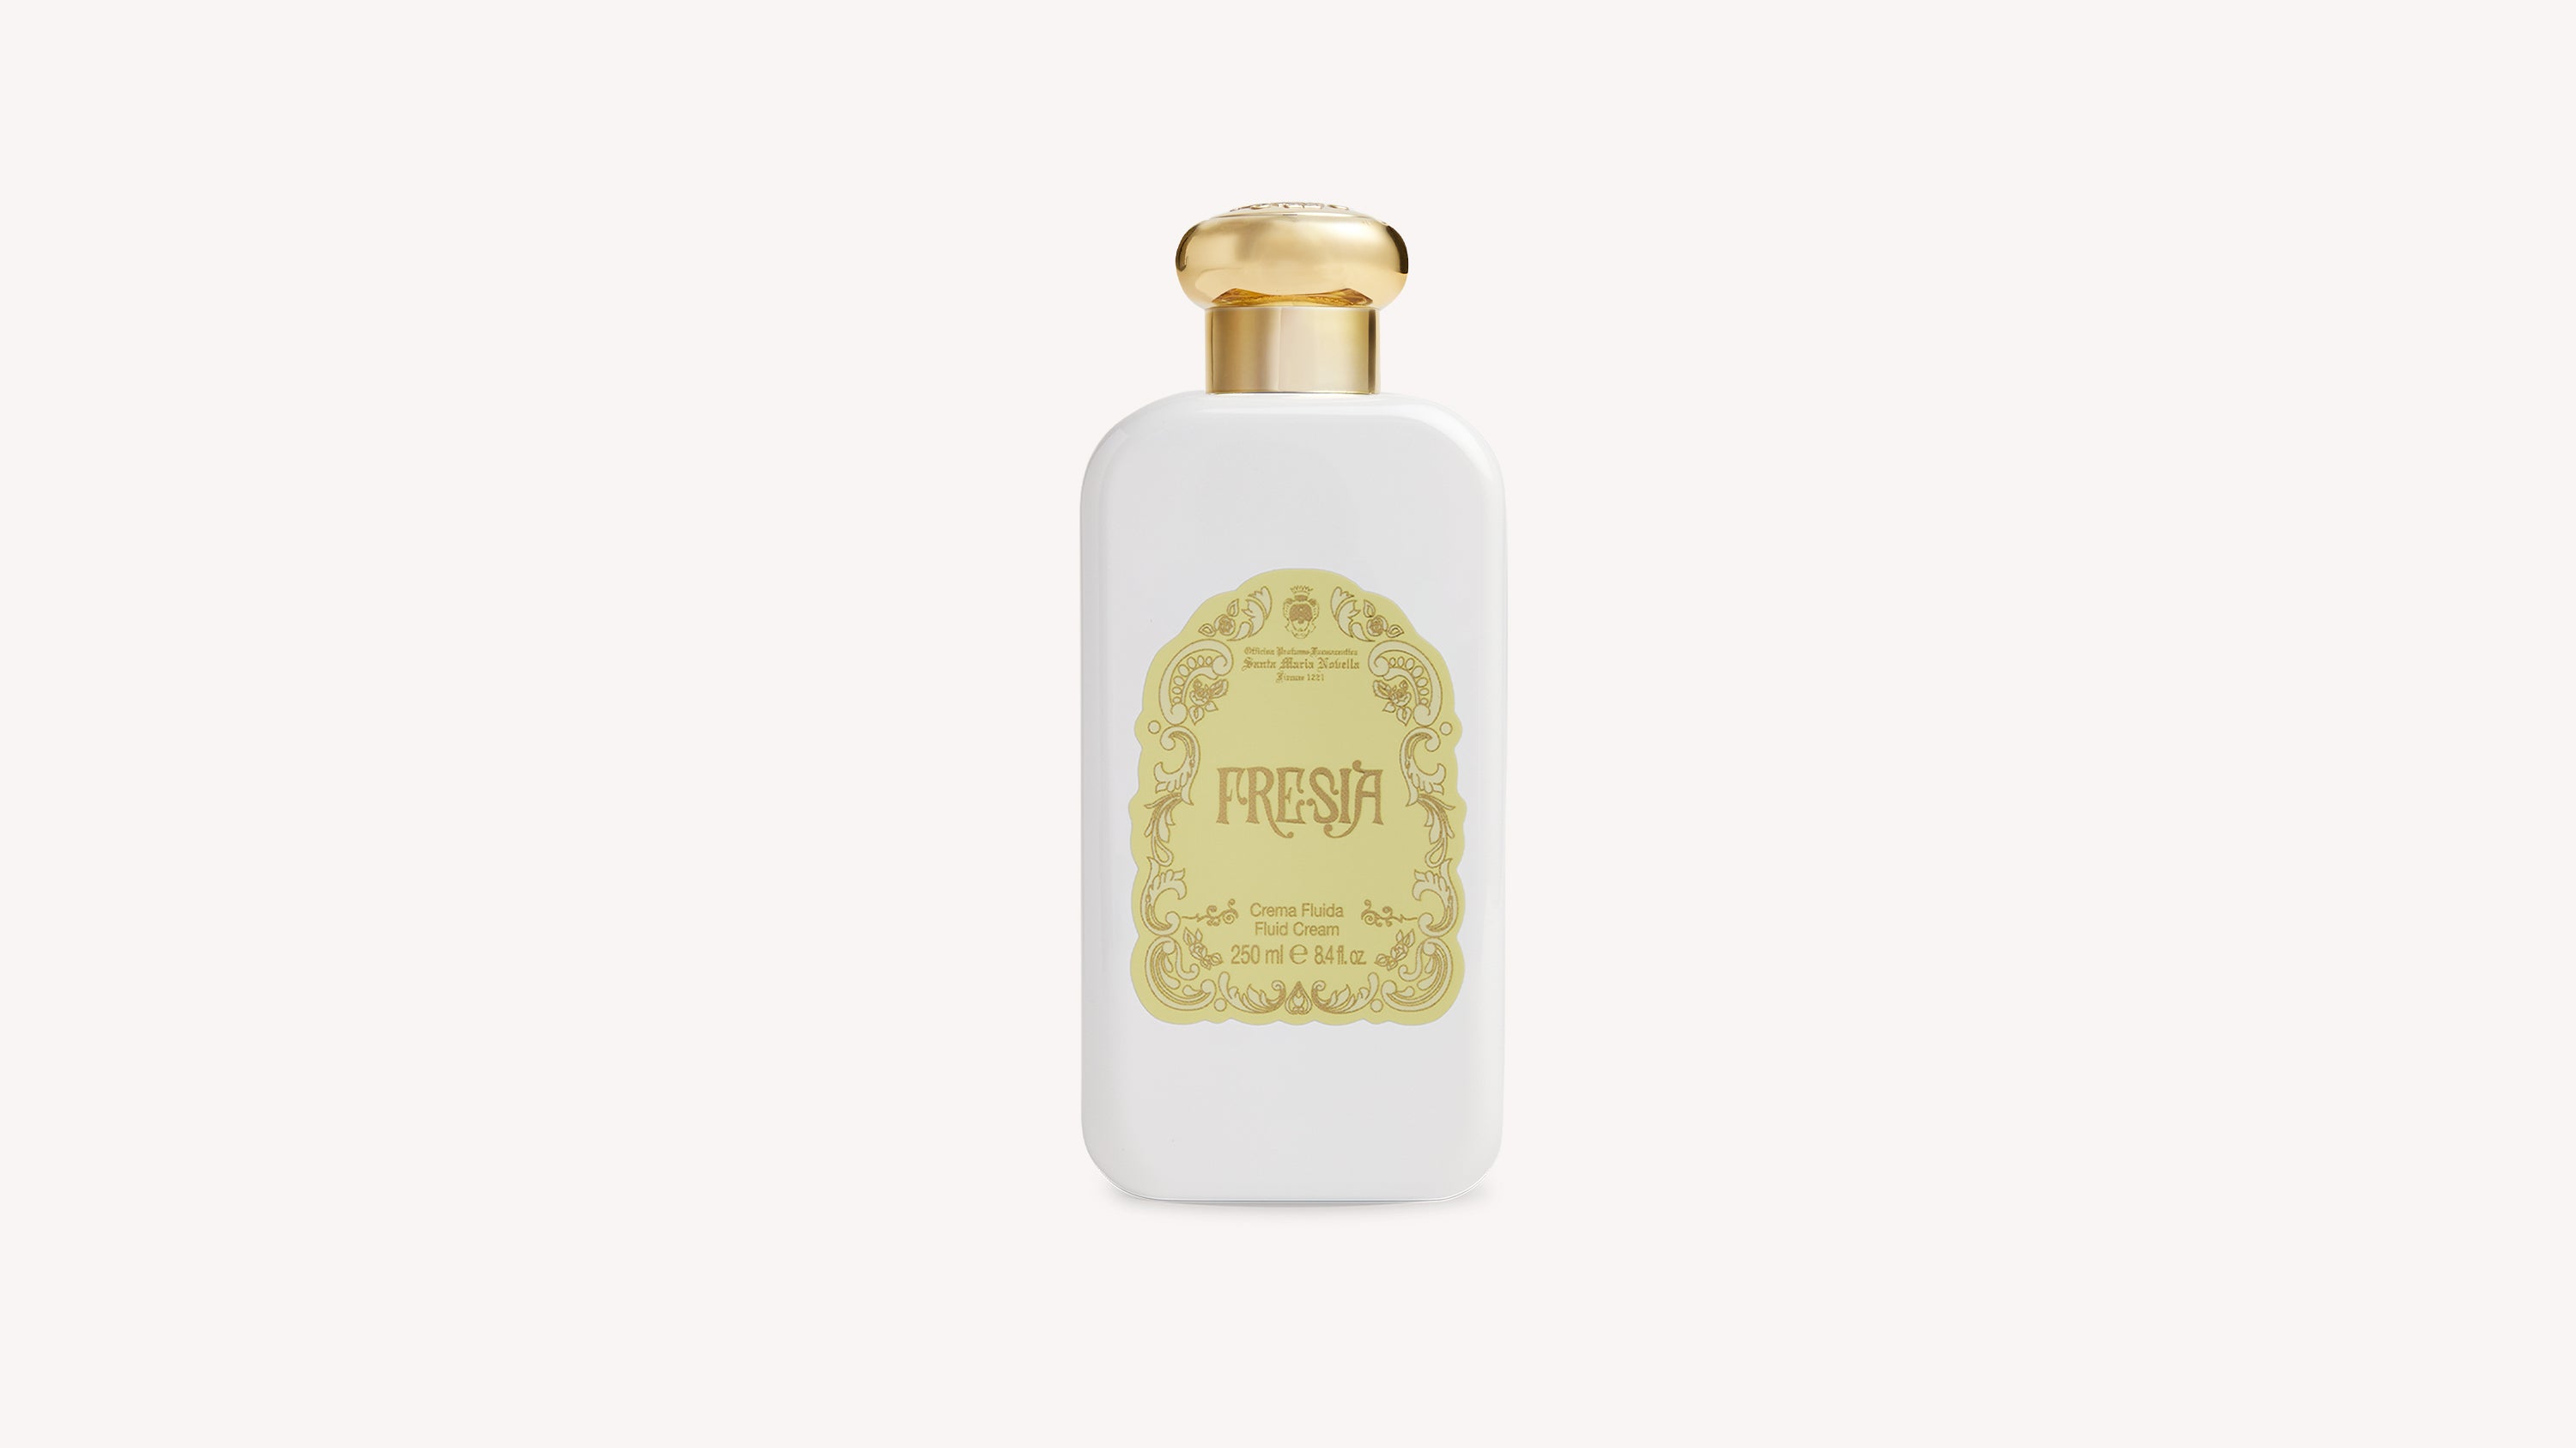 Fresia: Perfumed Body Cream - Santa Maria Novella